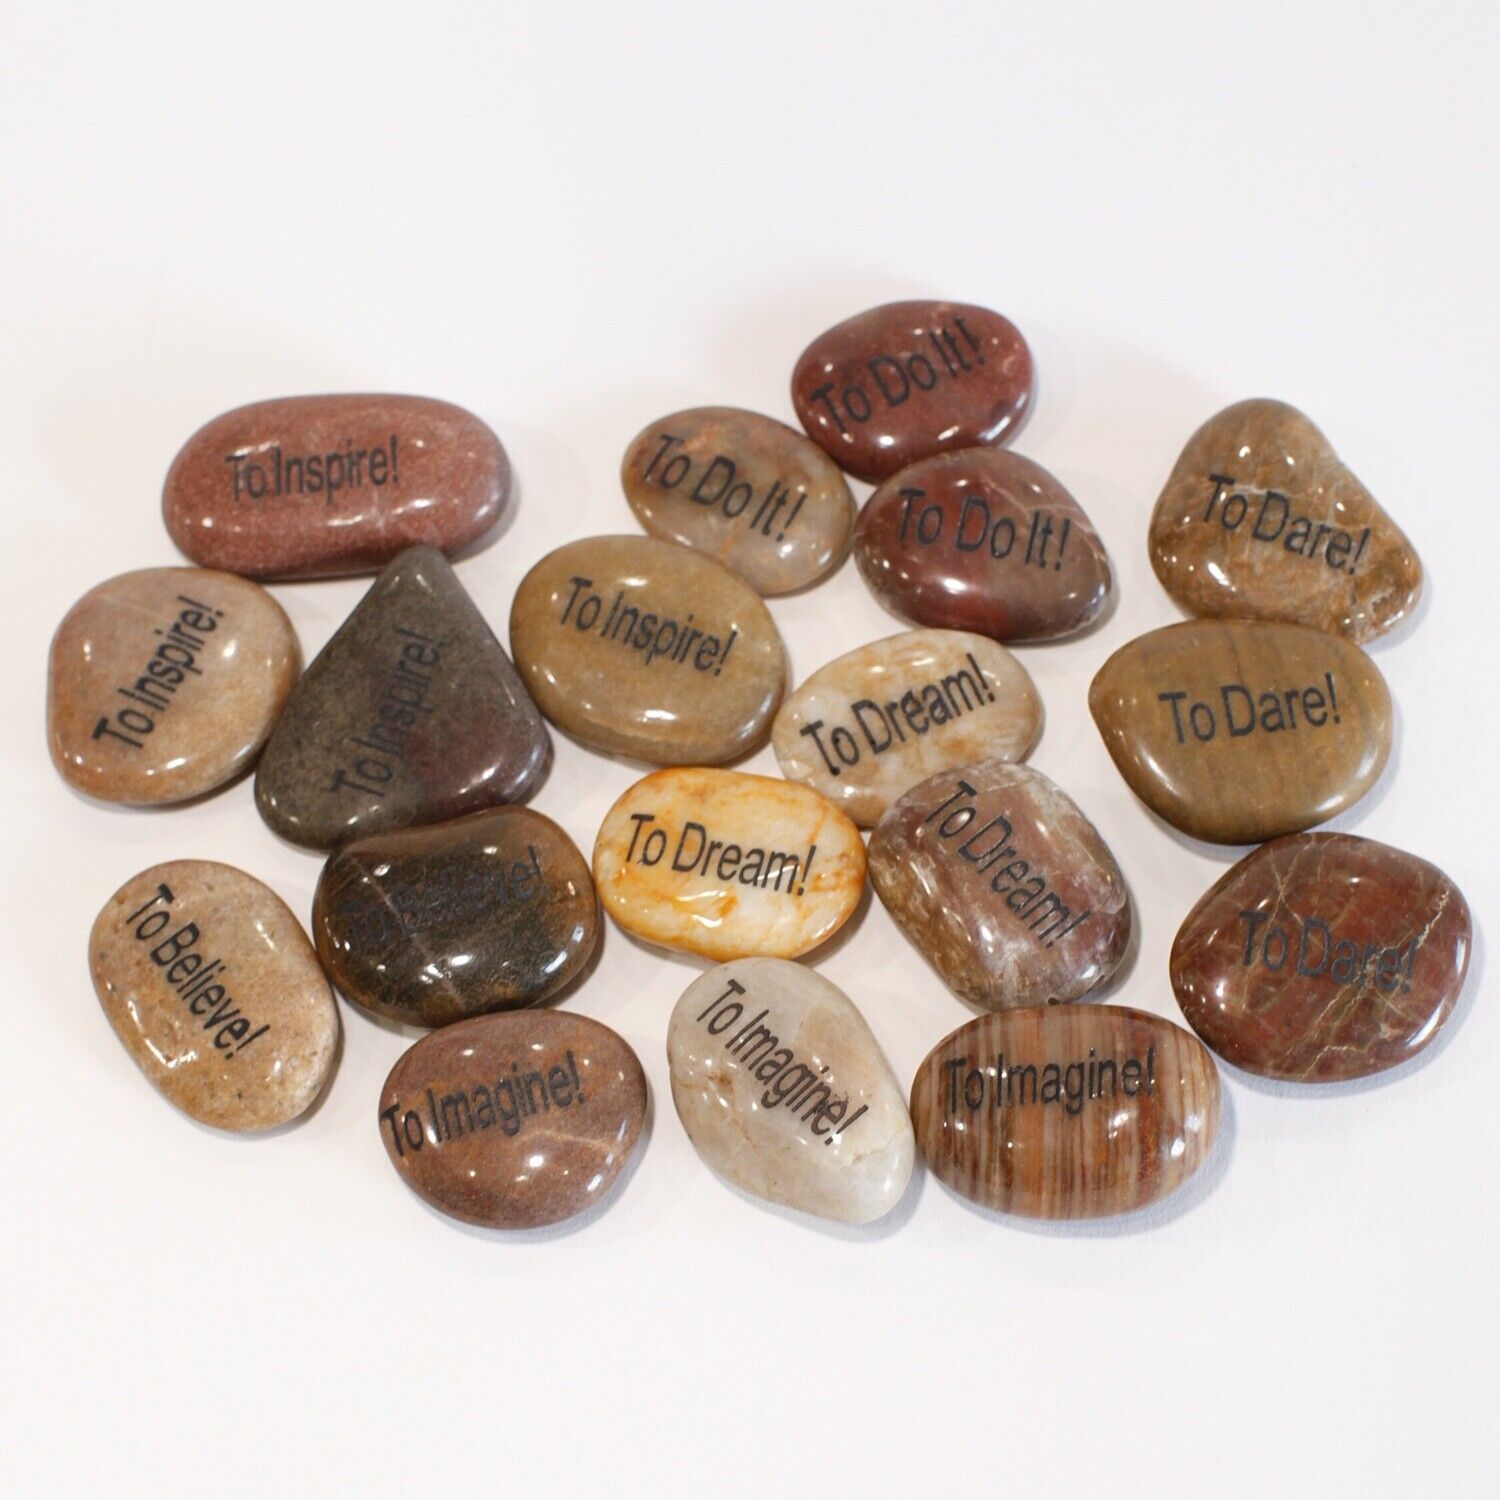 Inspirational Stones Rocks Engraved Sayings 18 Stones